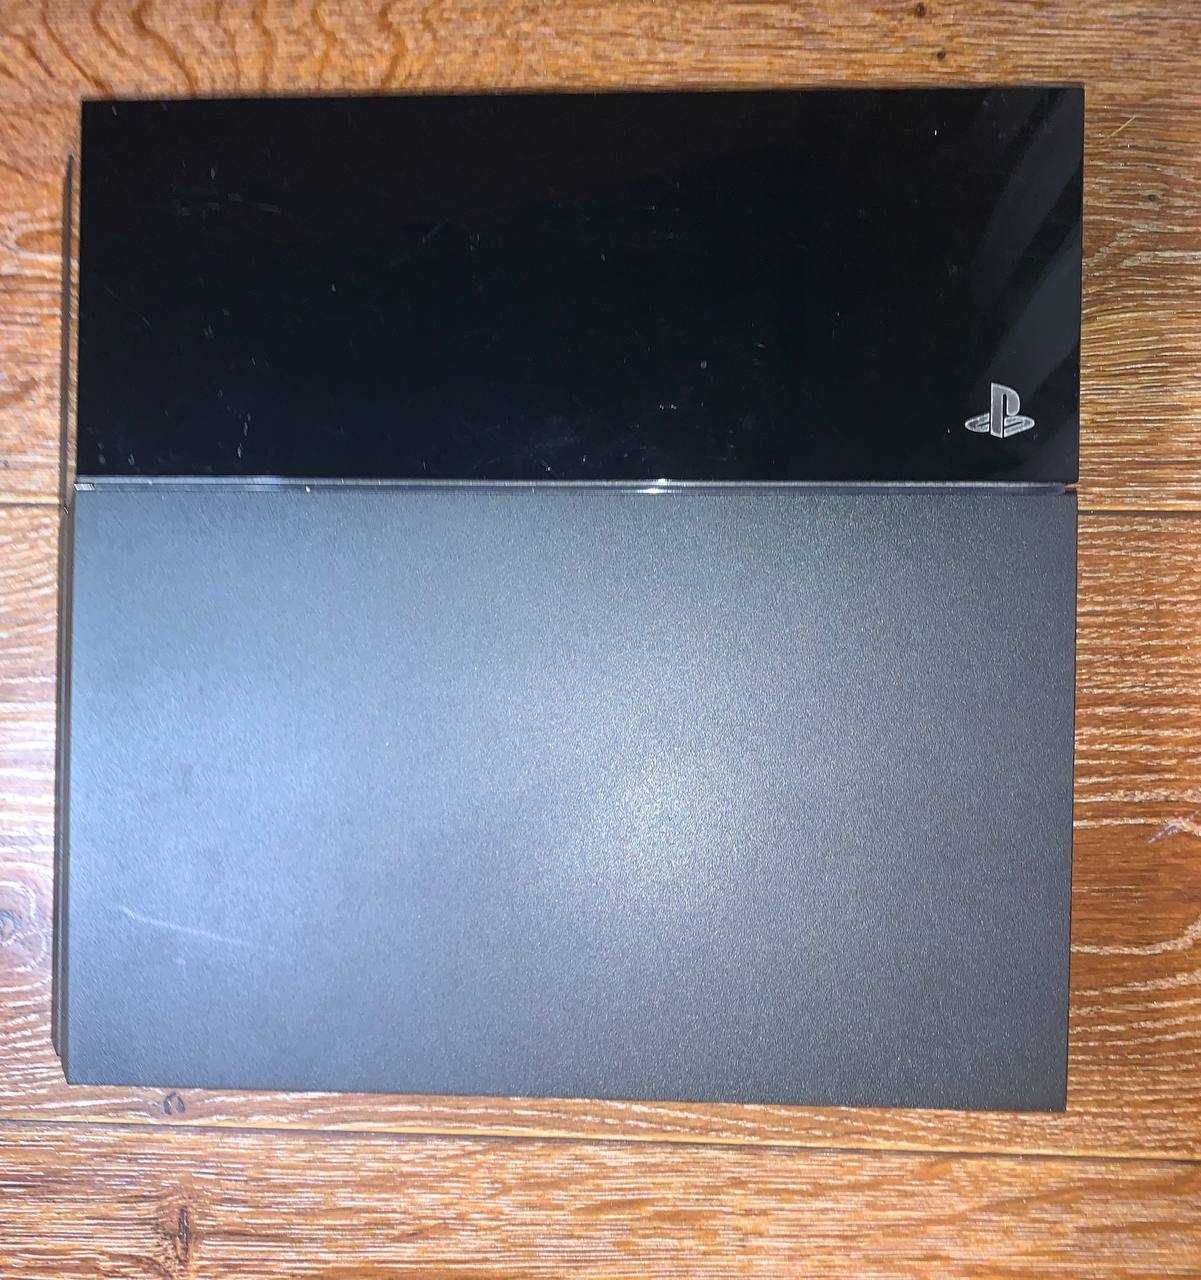 Playstation 4 Fat 500Gb Black